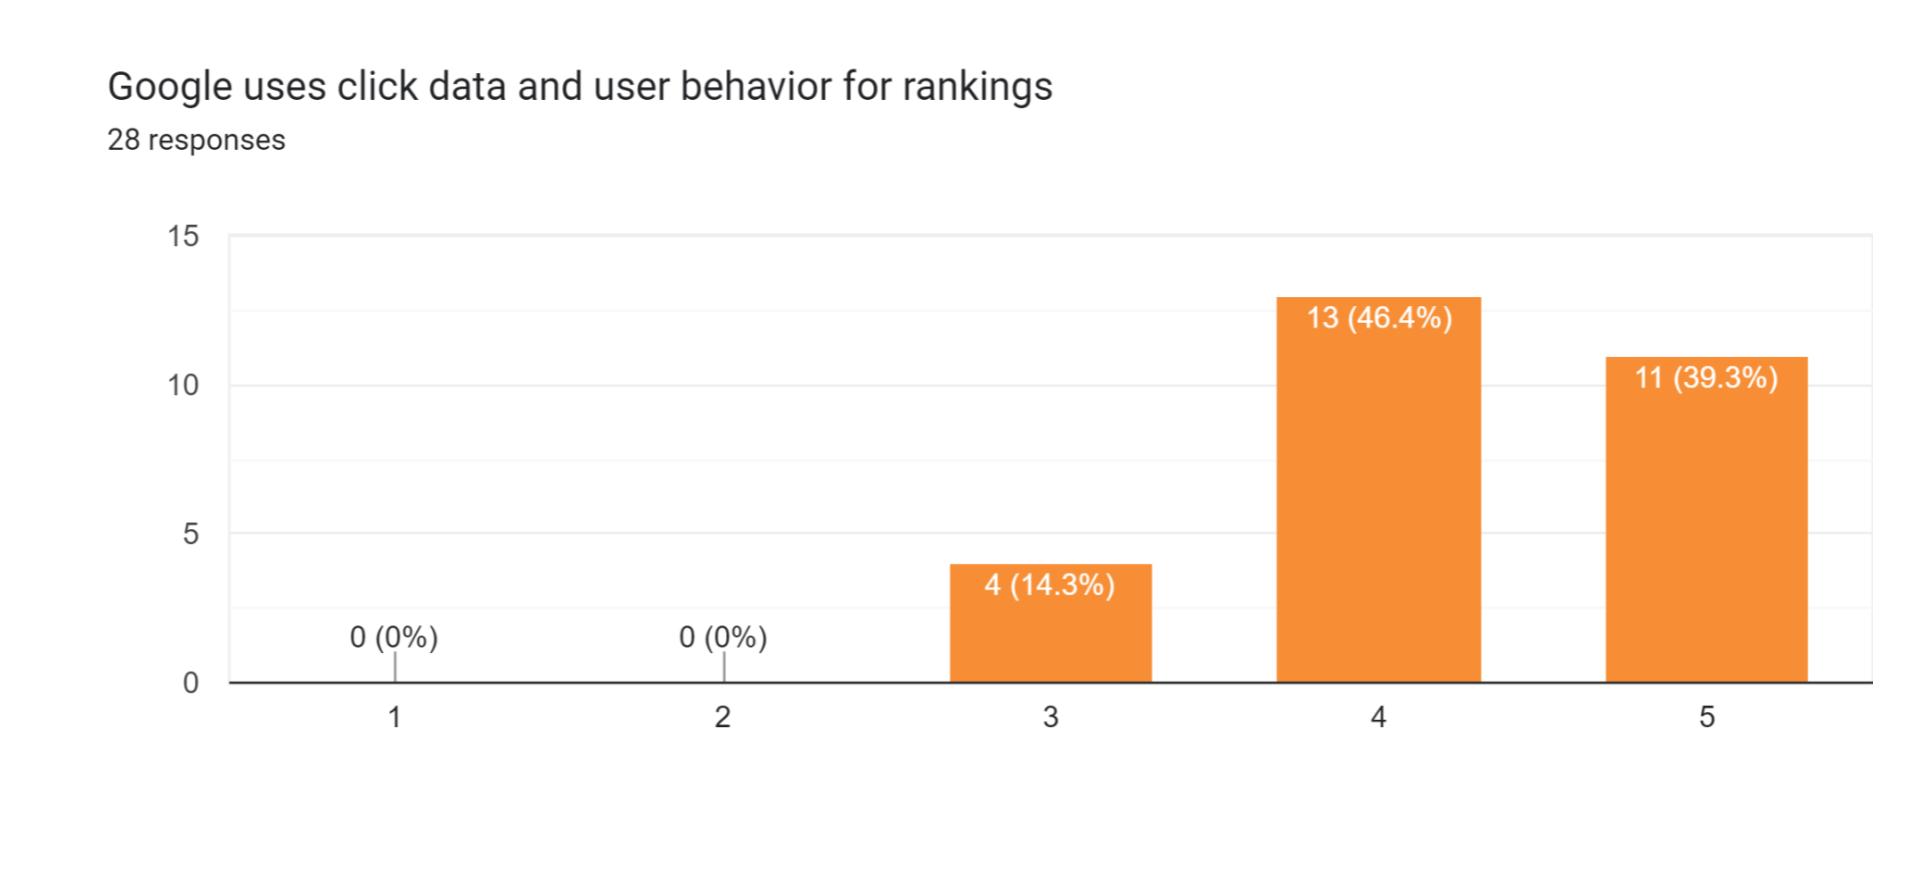 Google uses click data and user behavior for rankings